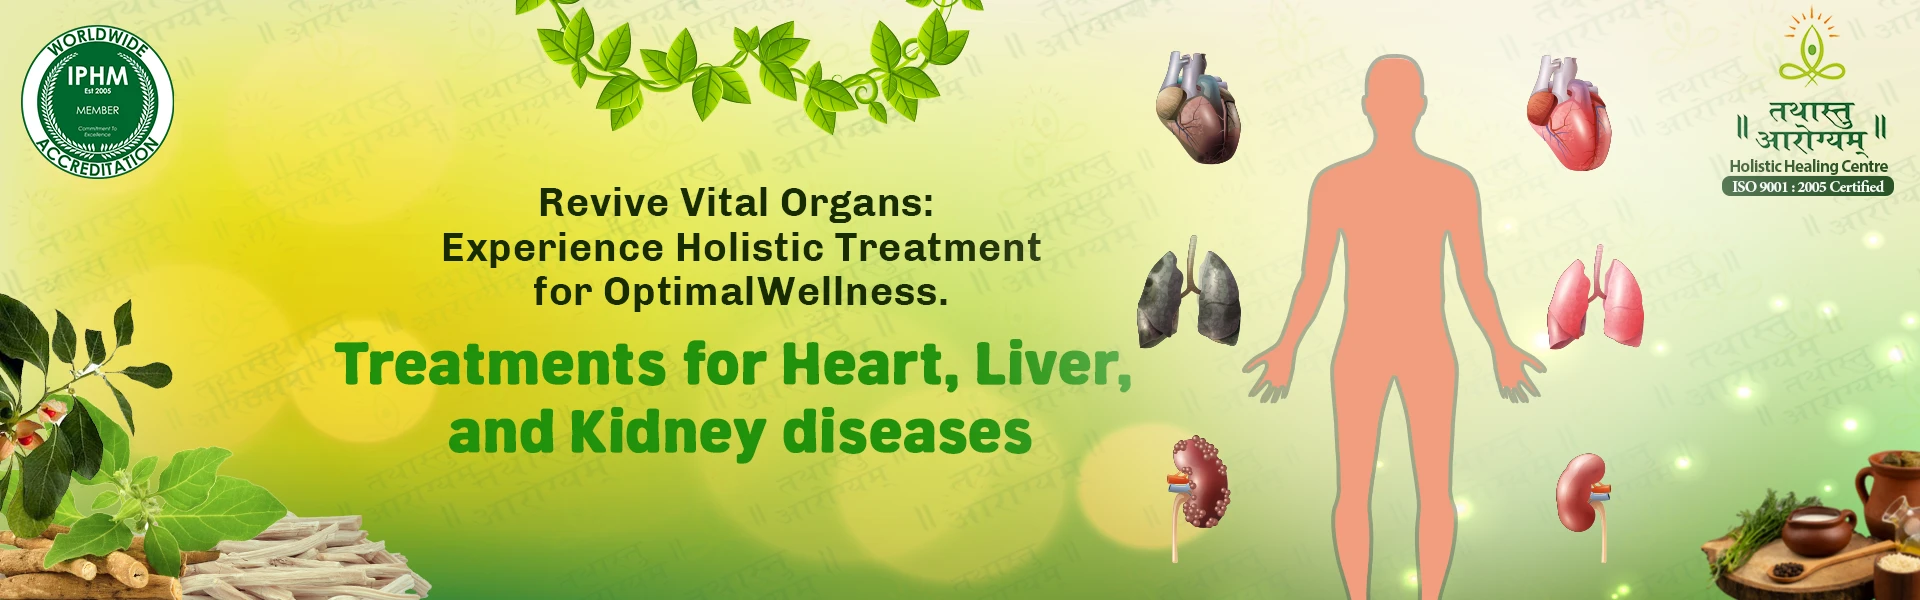 Heart,-Liver-& Kidney diseases